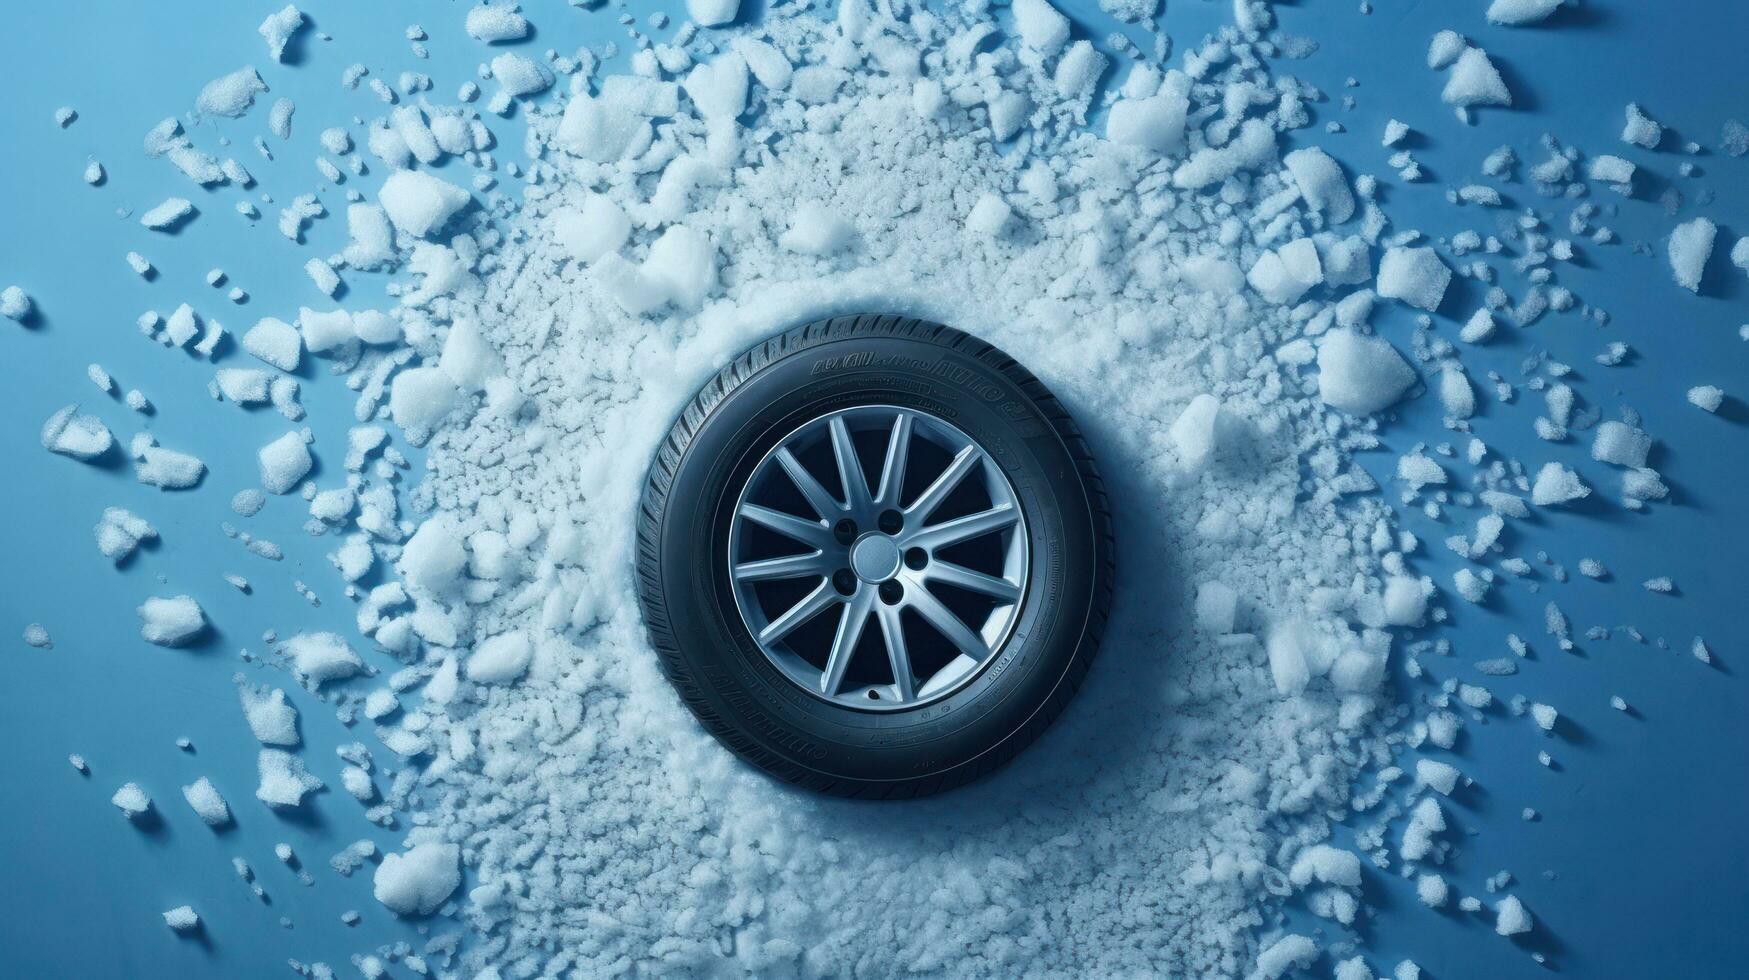 bil däck med realistisk snöflingor på blå bakgrund foto